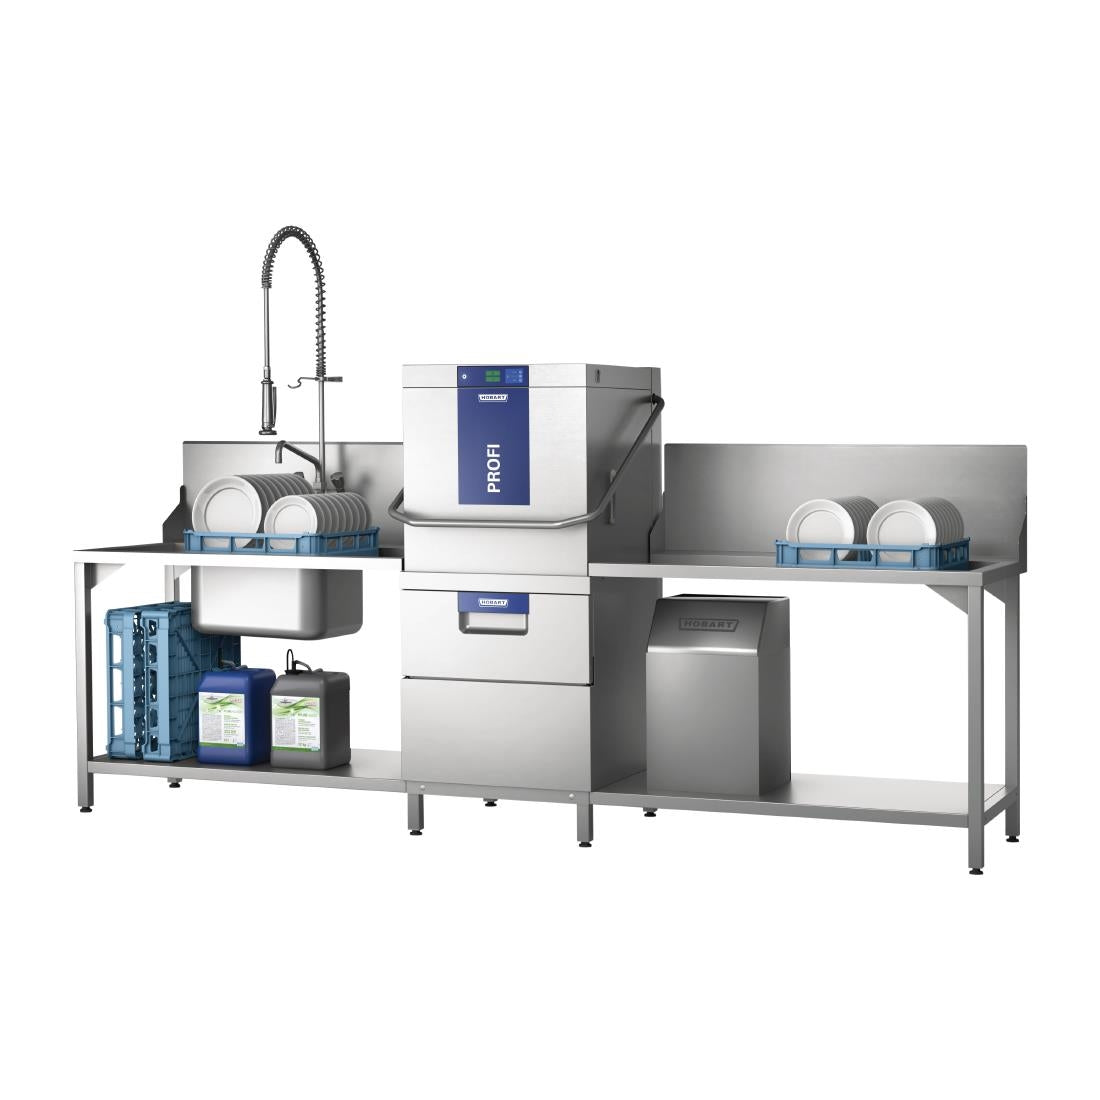 FE666 Hobart Profi Dual Level Pass Through Dishwasher TLWW-10A JD Catering Equipment Solutions Ltd